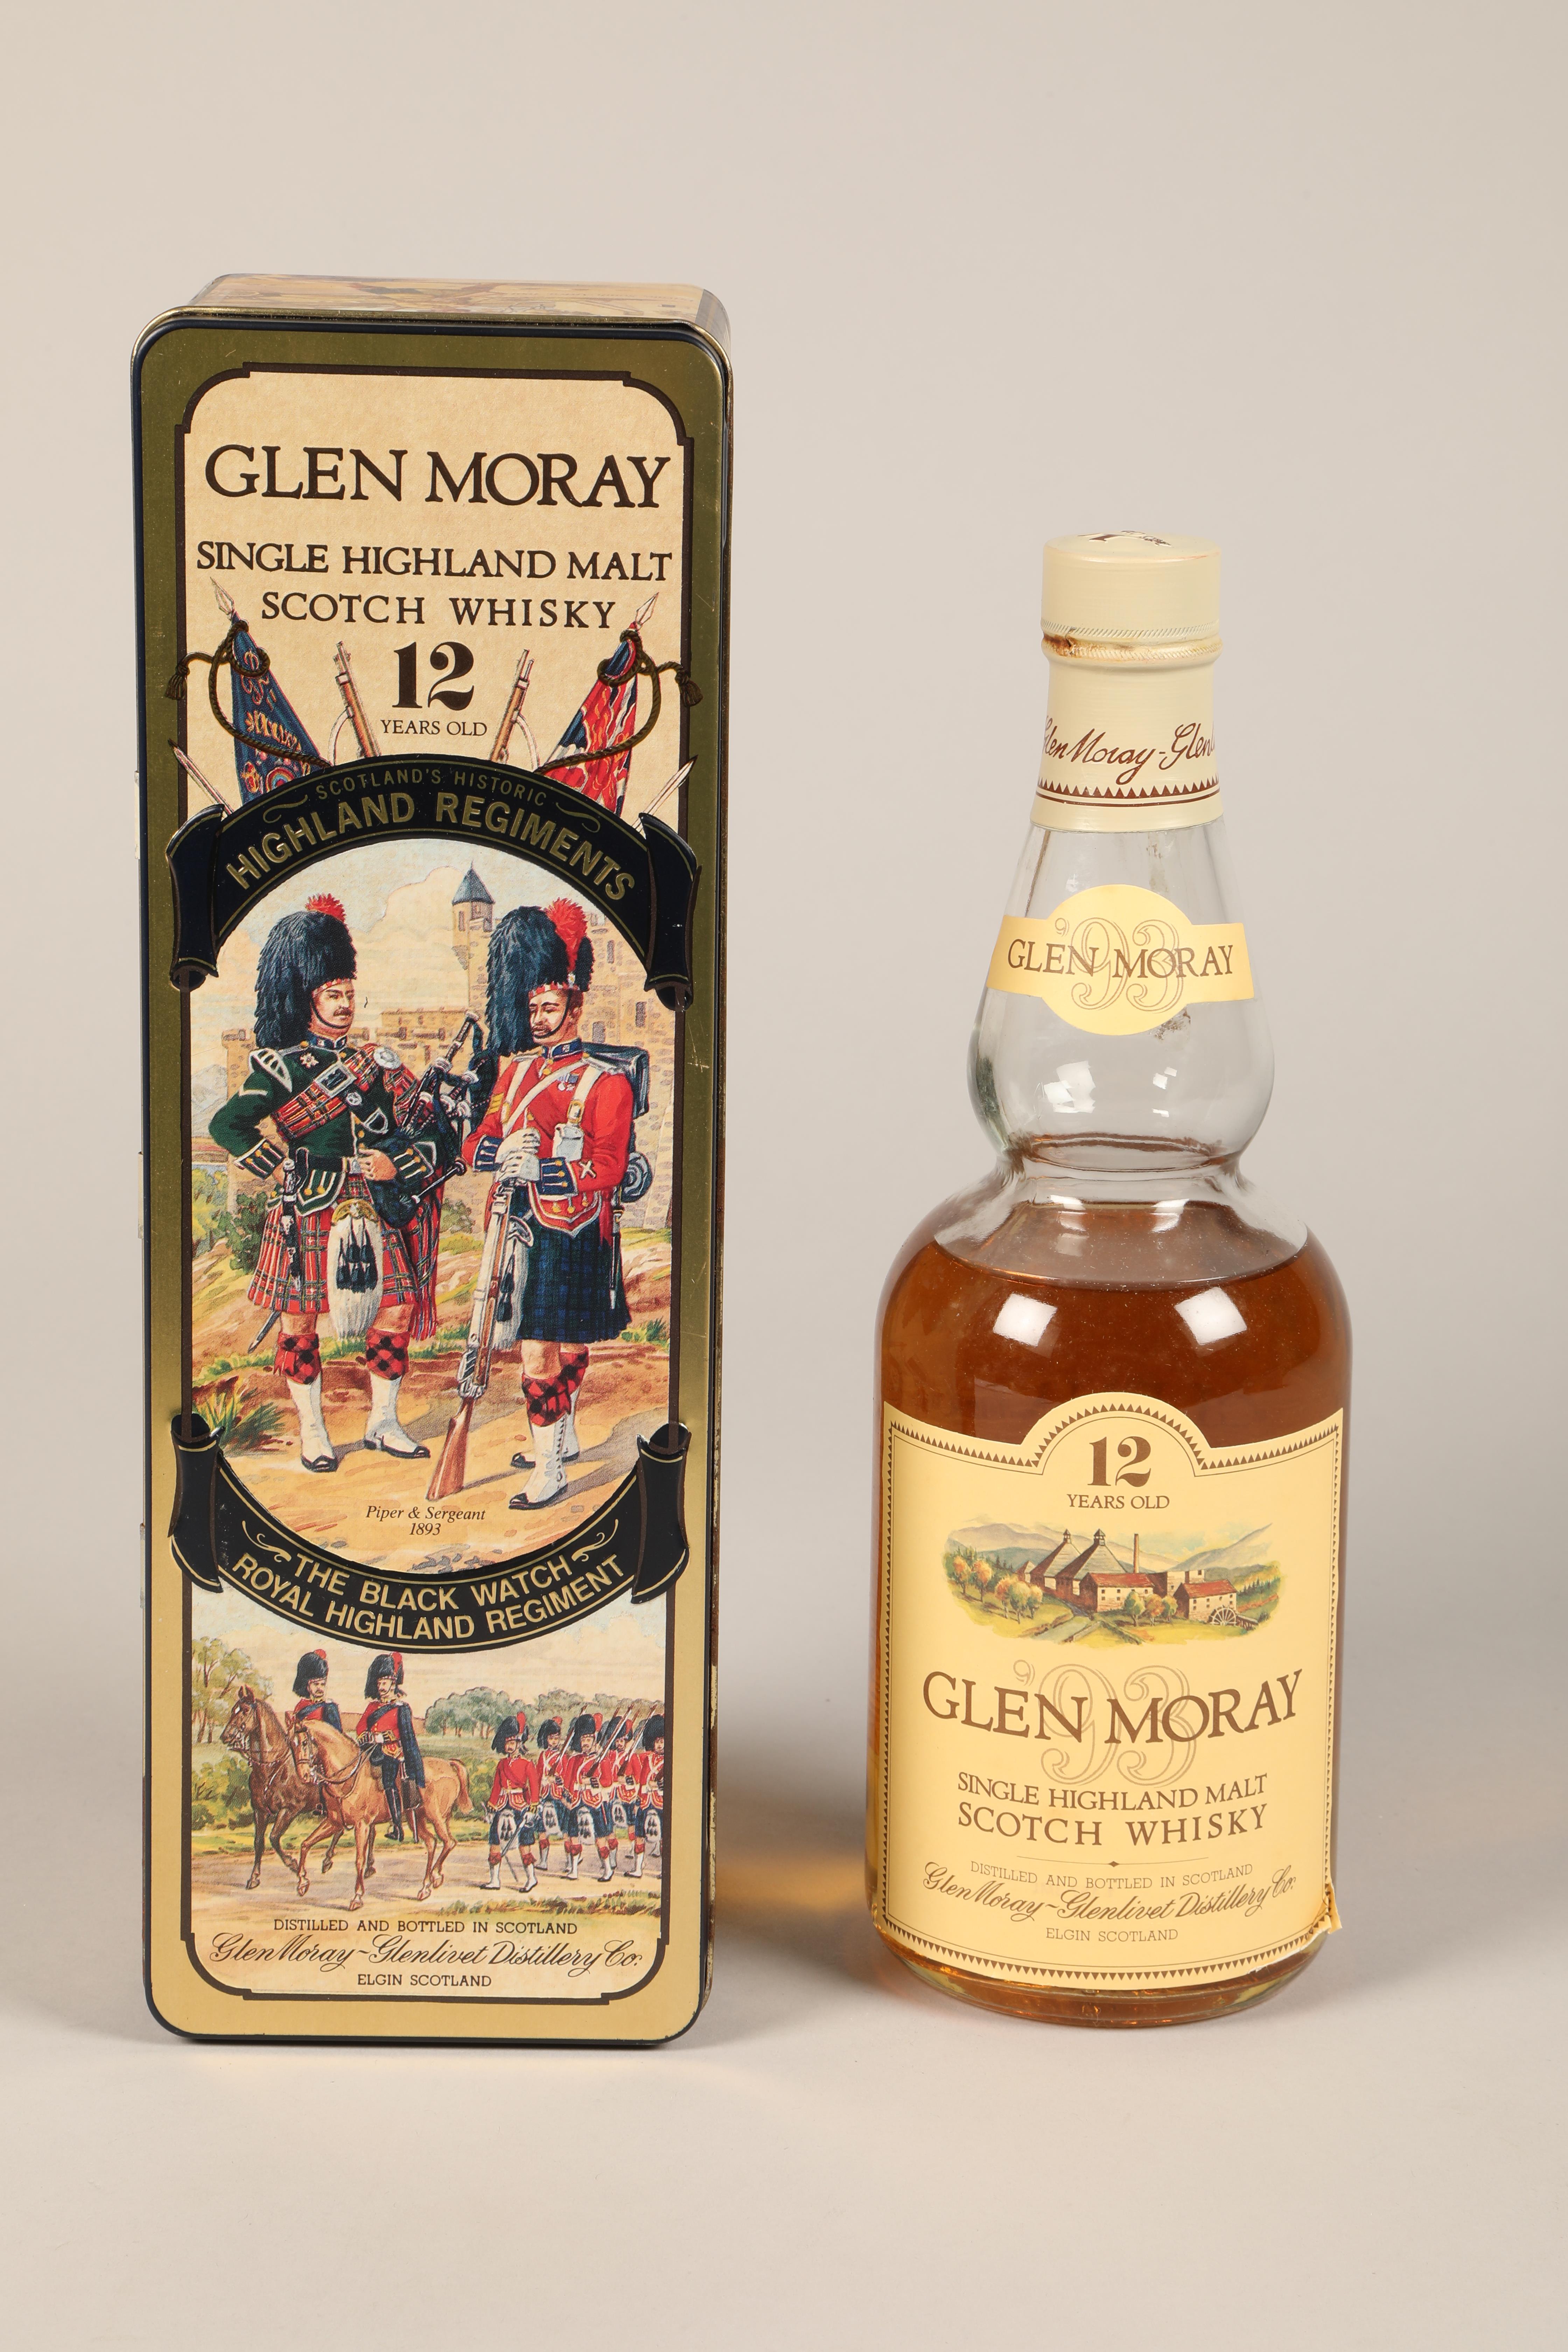 Glenmoray Single 12 year old Highland Scotch Whisky, 'Scotland's Historic Highland Regiment' The